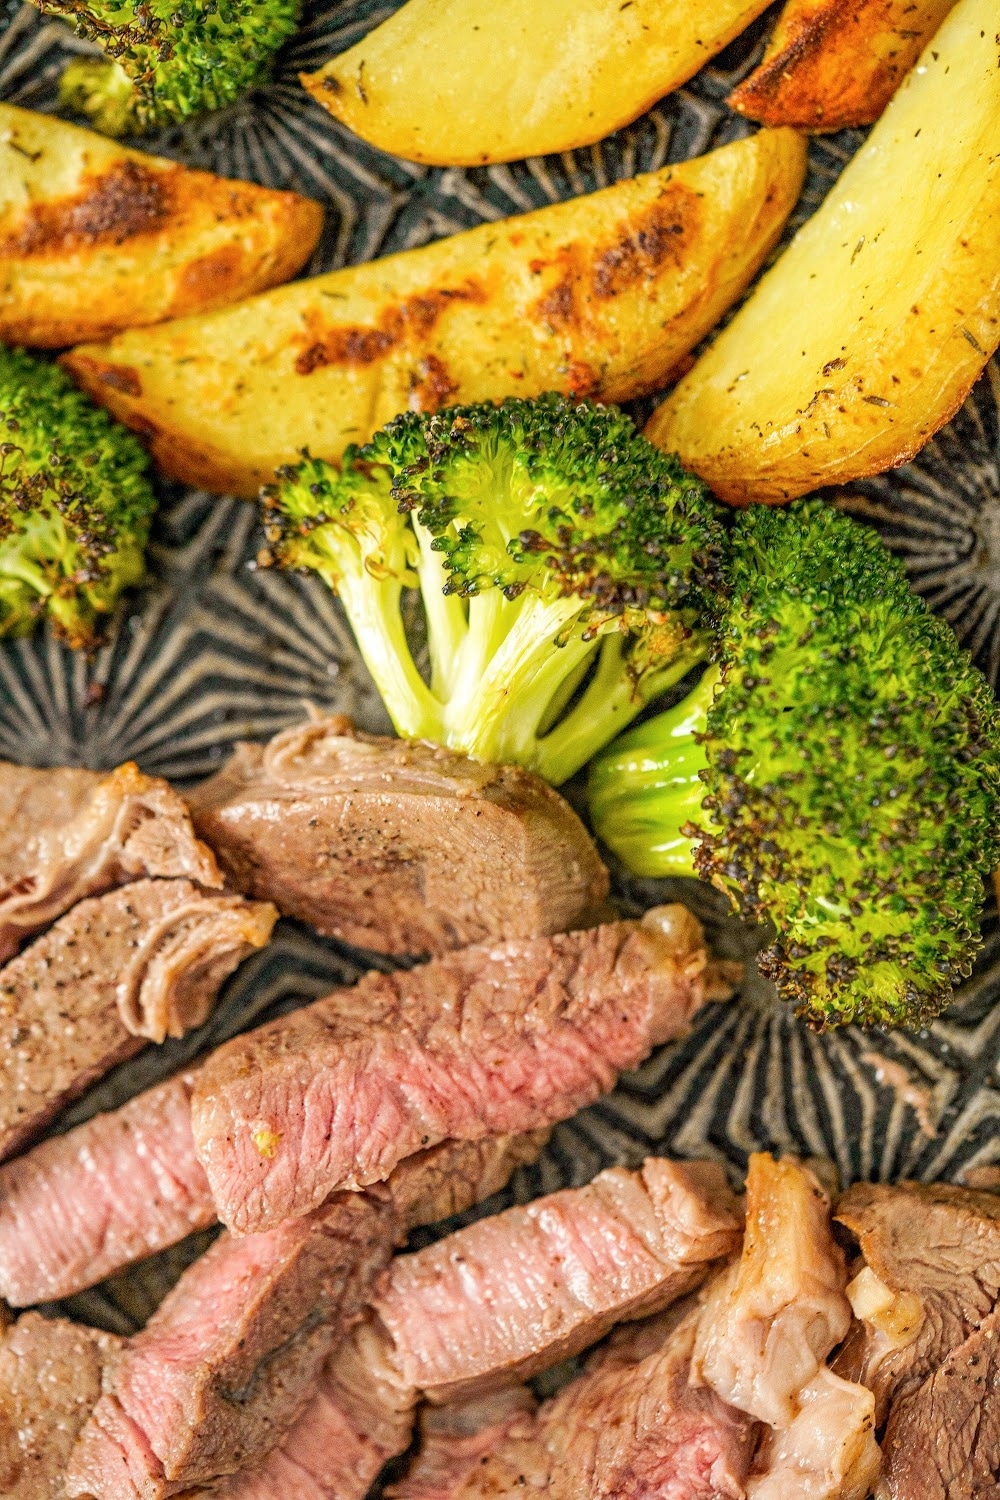 Golden potatoes, broccoli and sliced steak on a sheet pan.